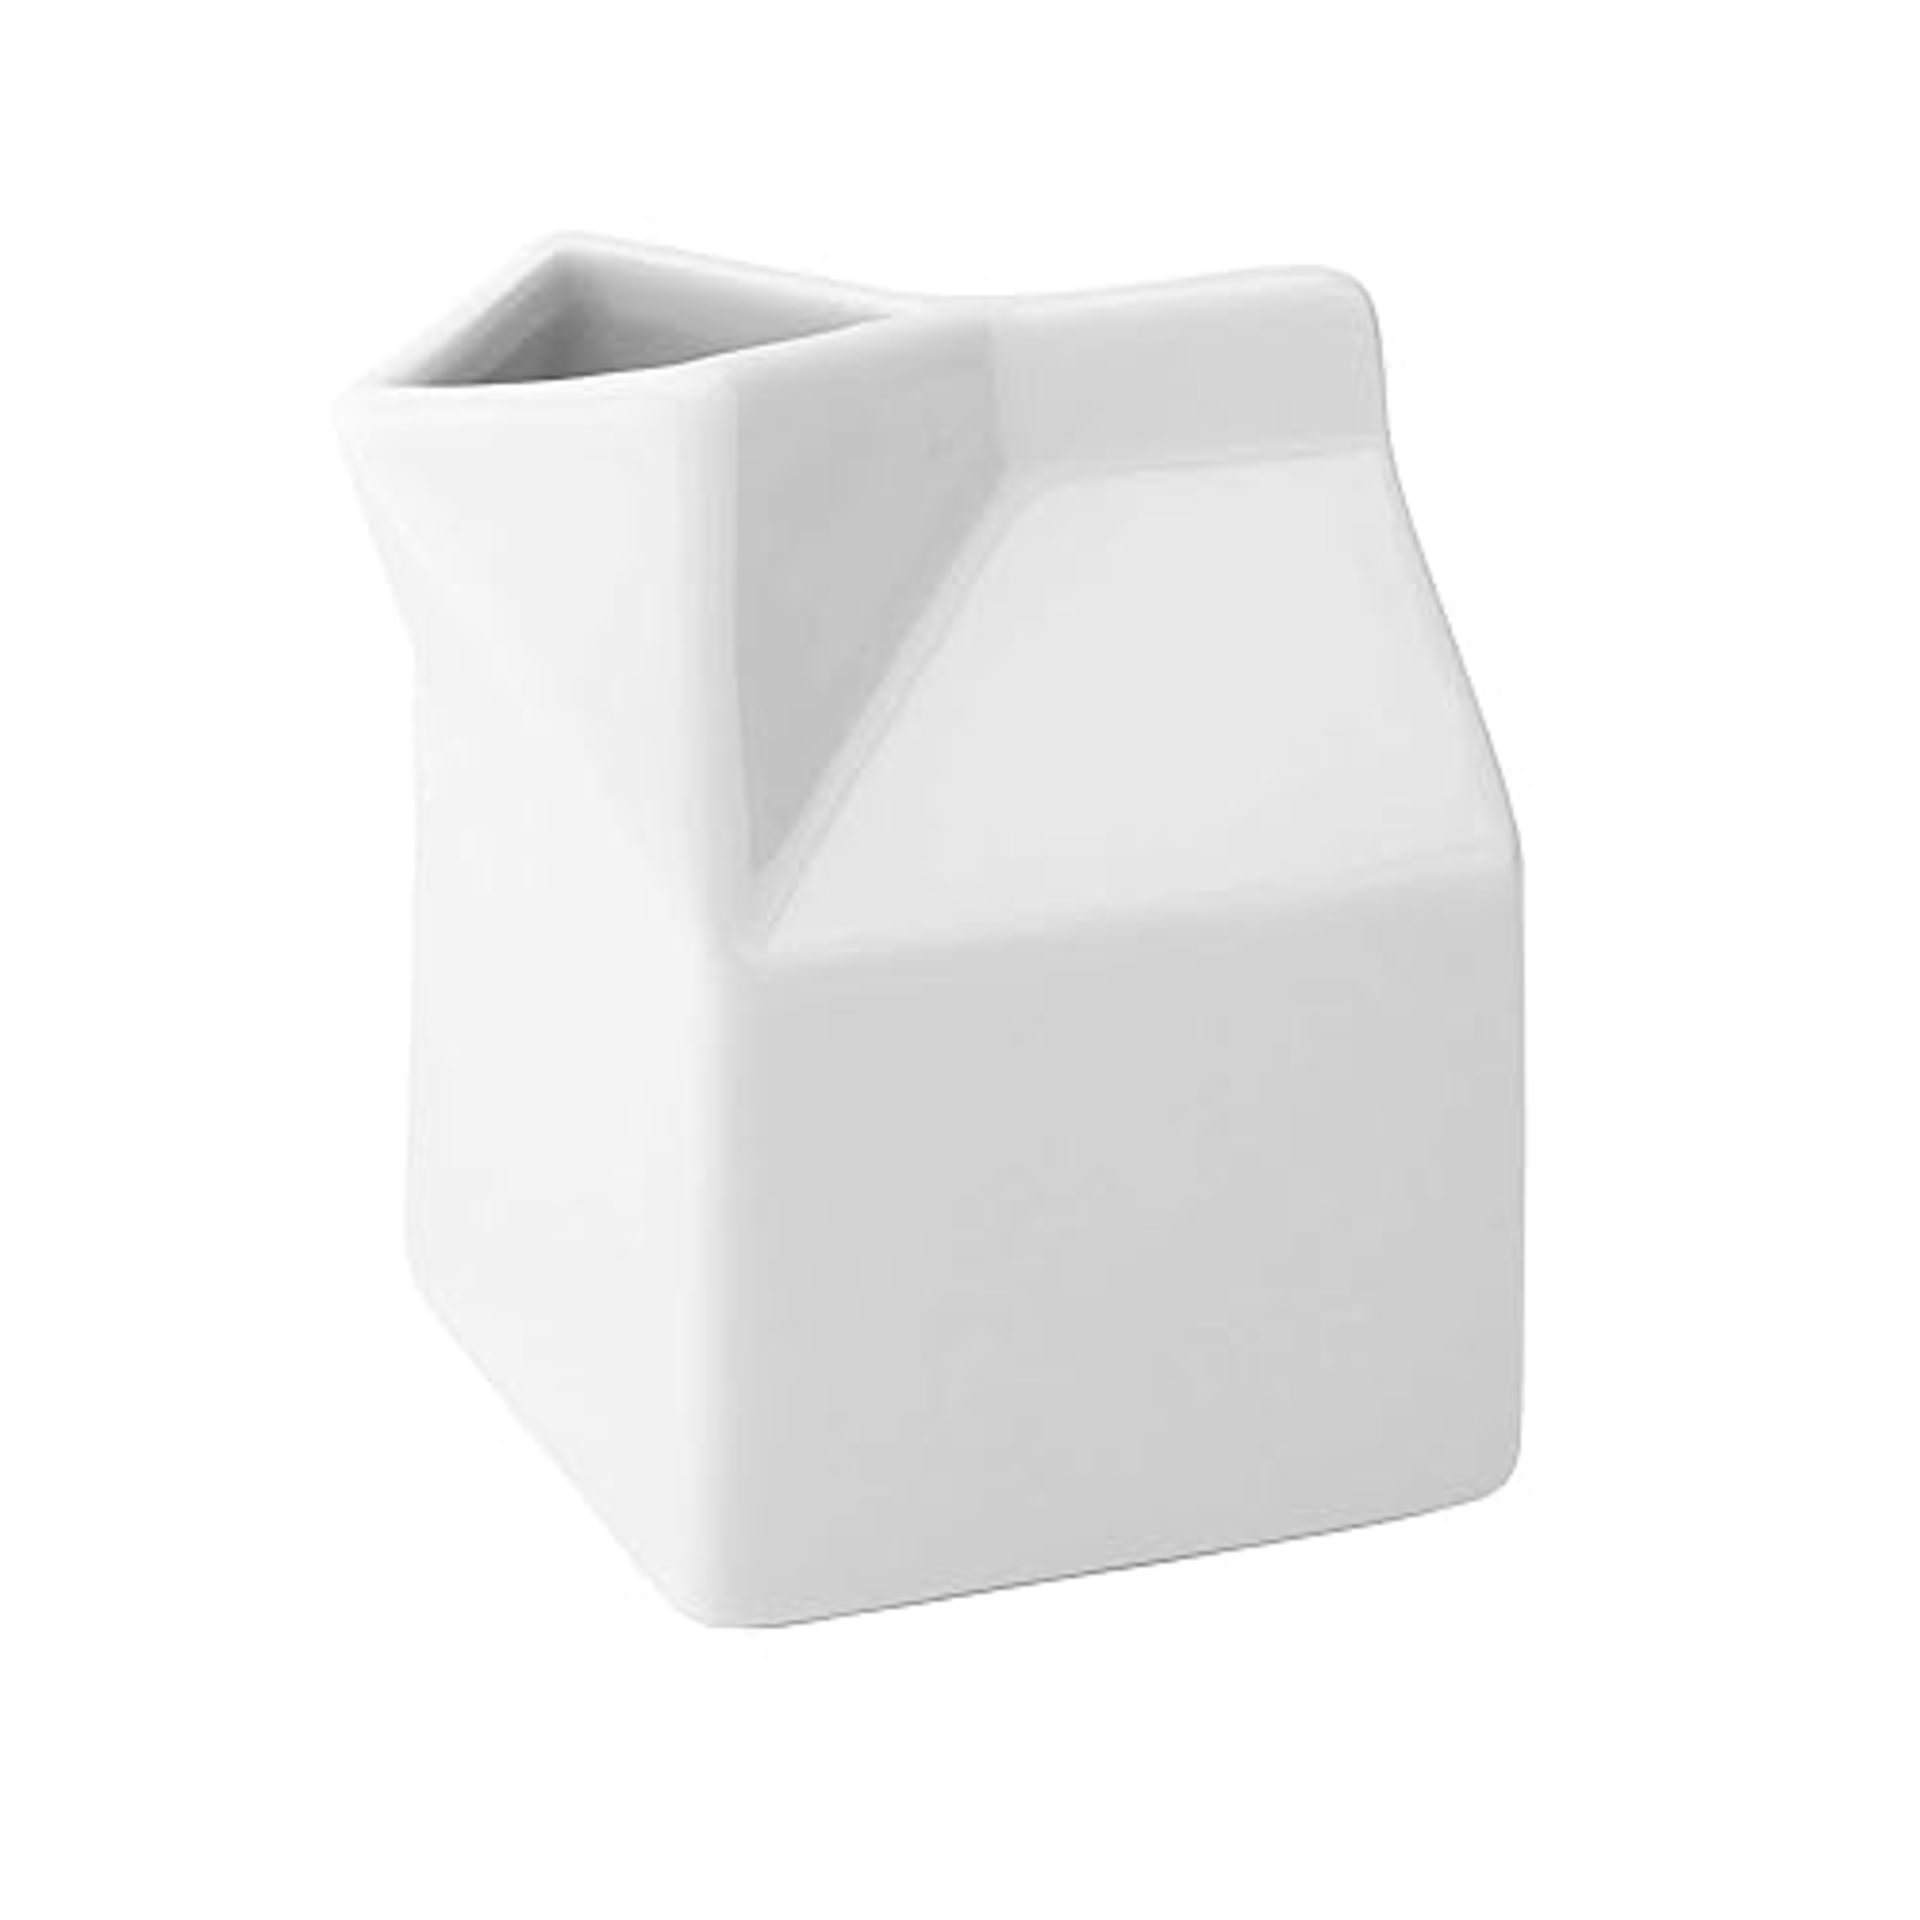 Ceramic Milk Carton 10.5oz / 300ml - Novelty Hot Beverage Service White Jug